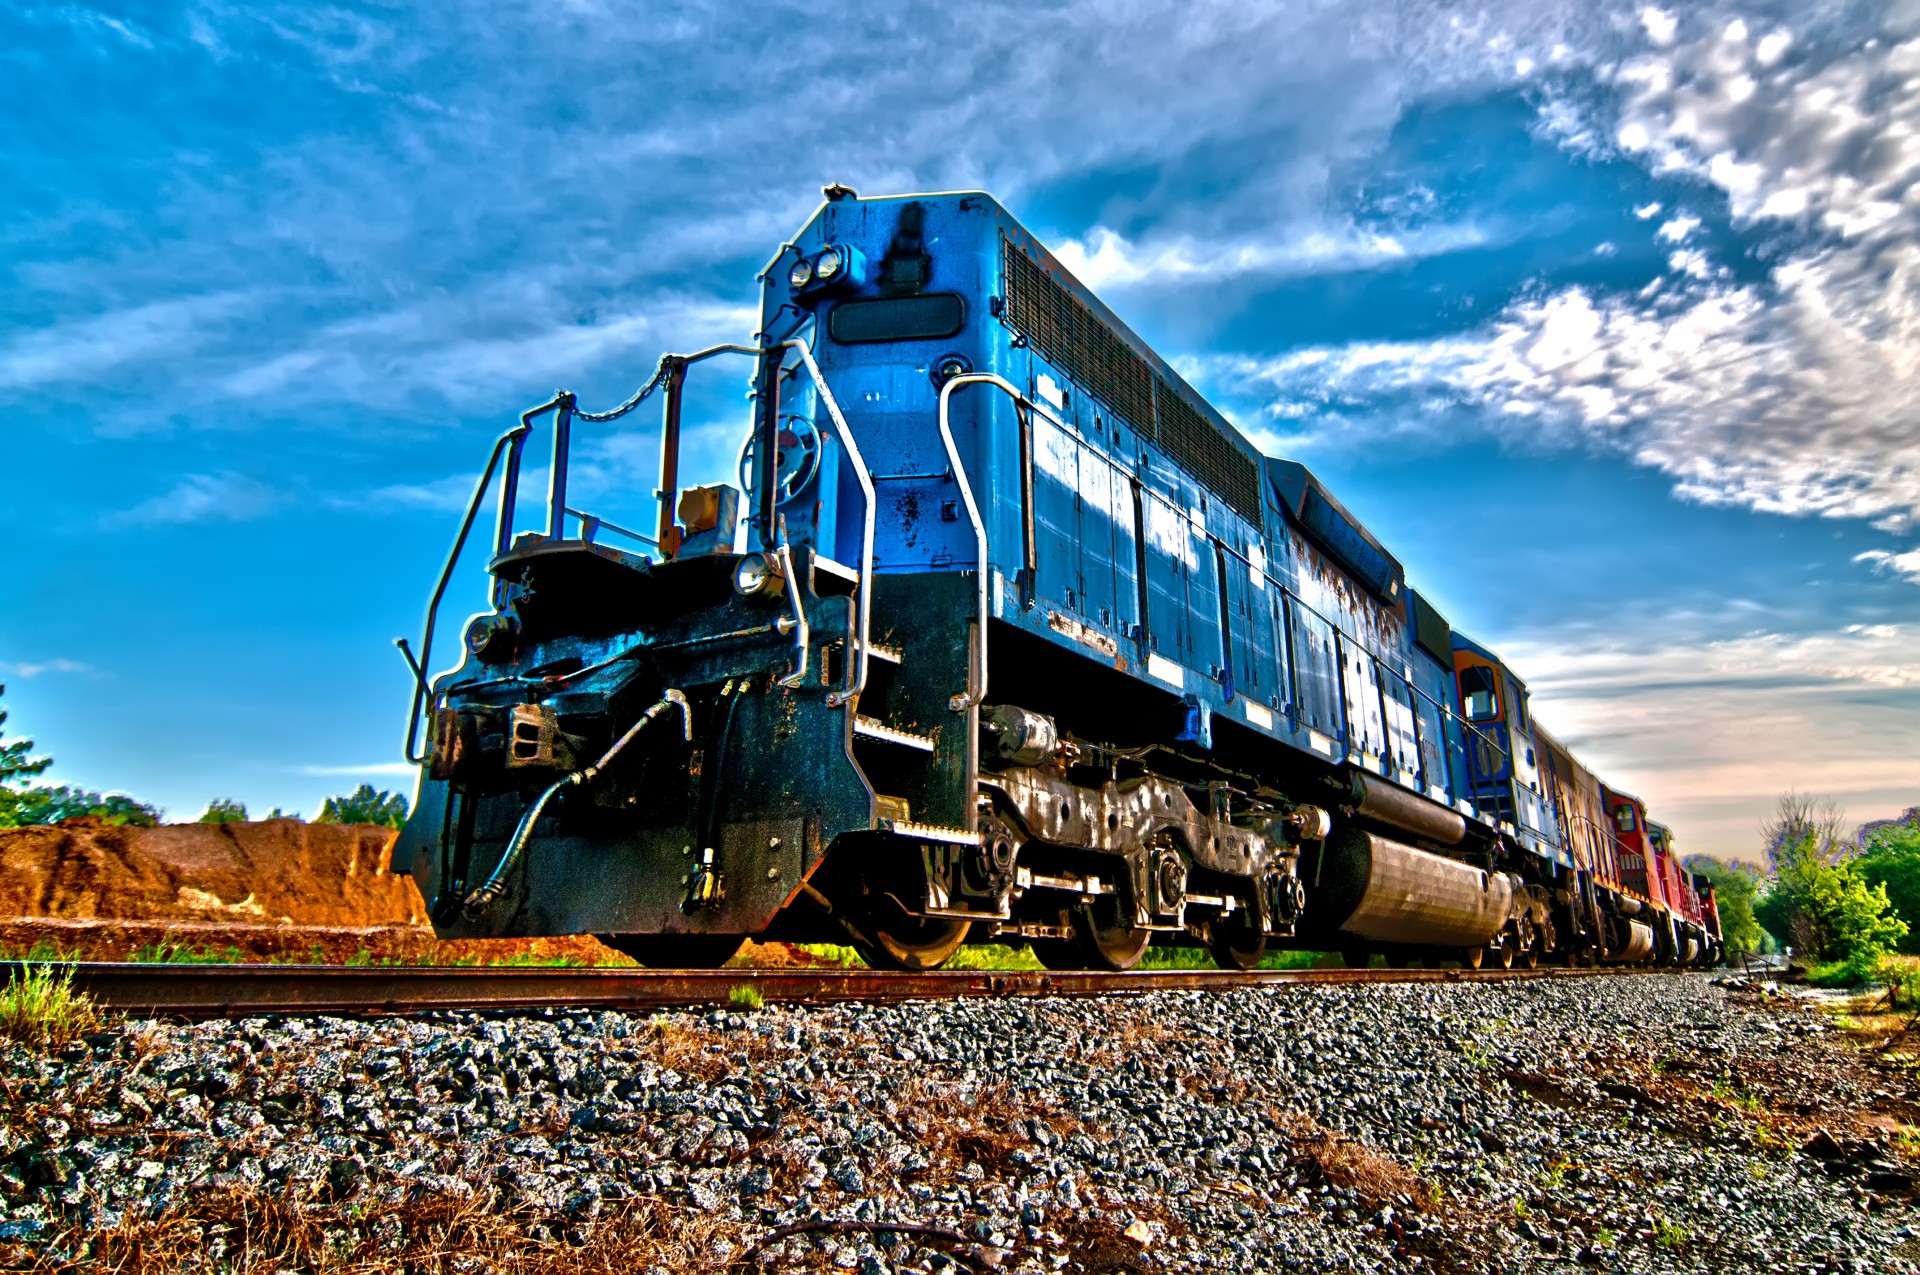 Blue Freight Engine Train